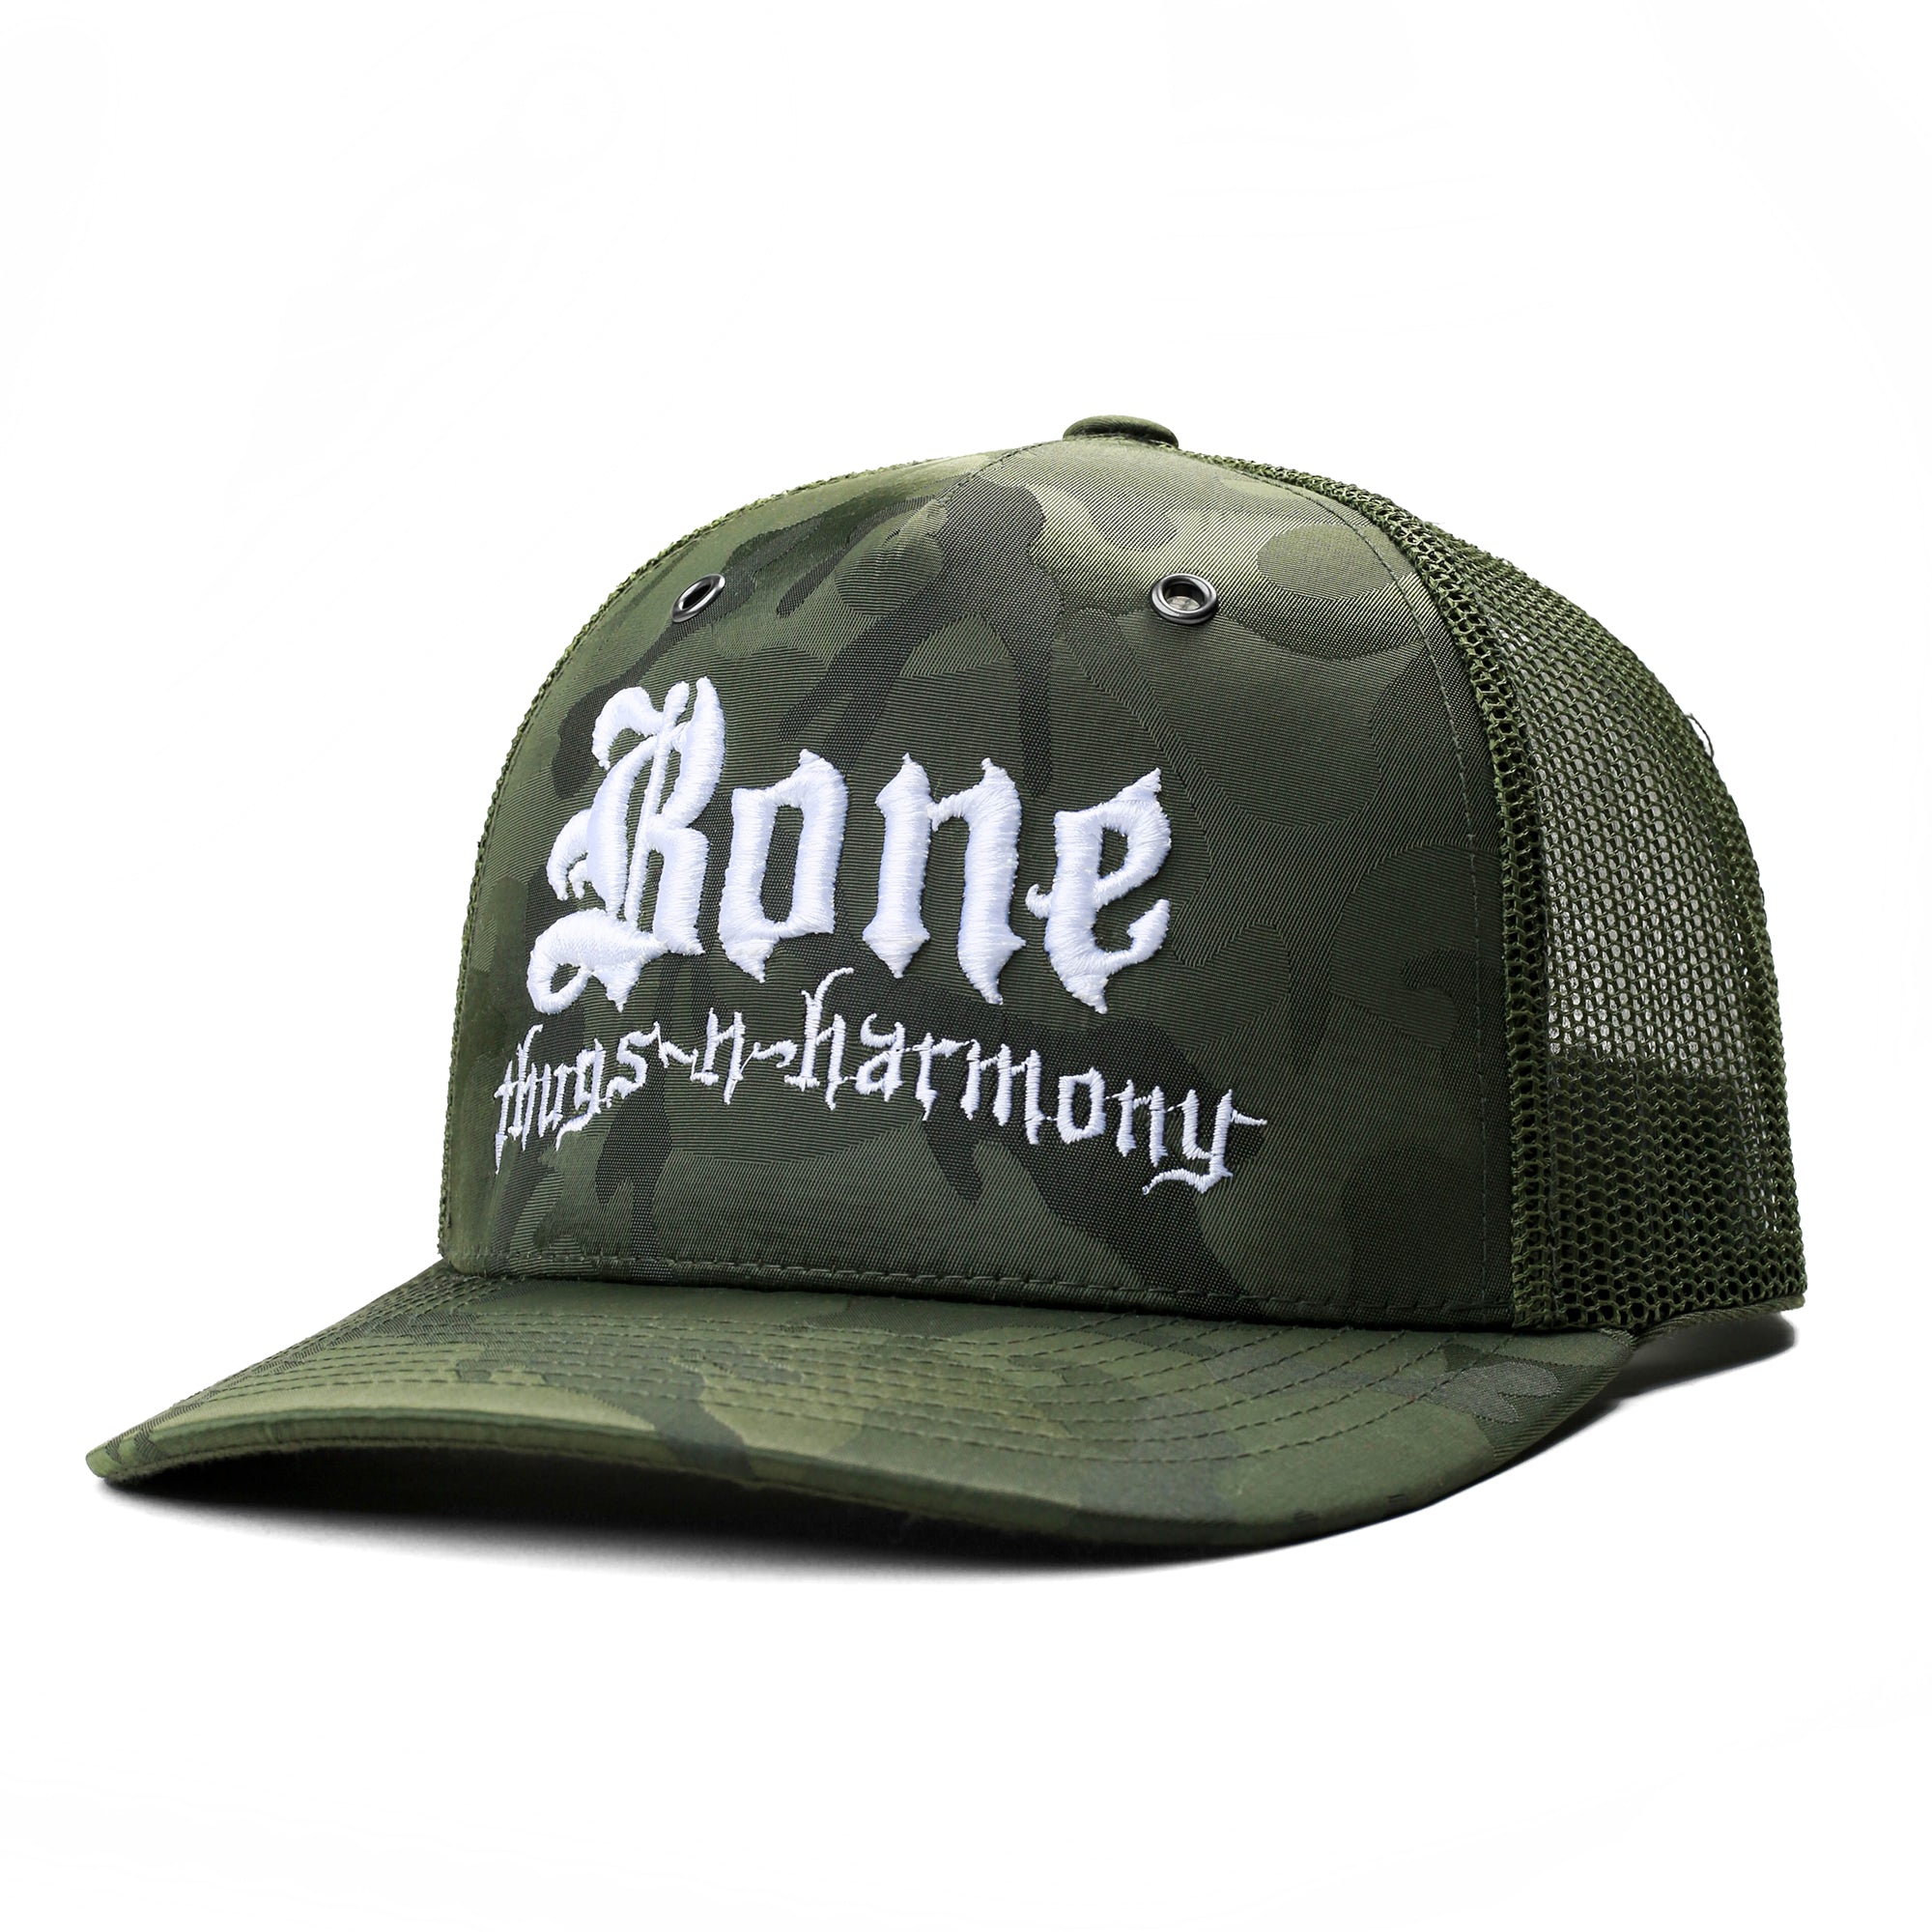 Bone Thugs-N-Harmony Military Green Camo w/ Mesh Back Snapback